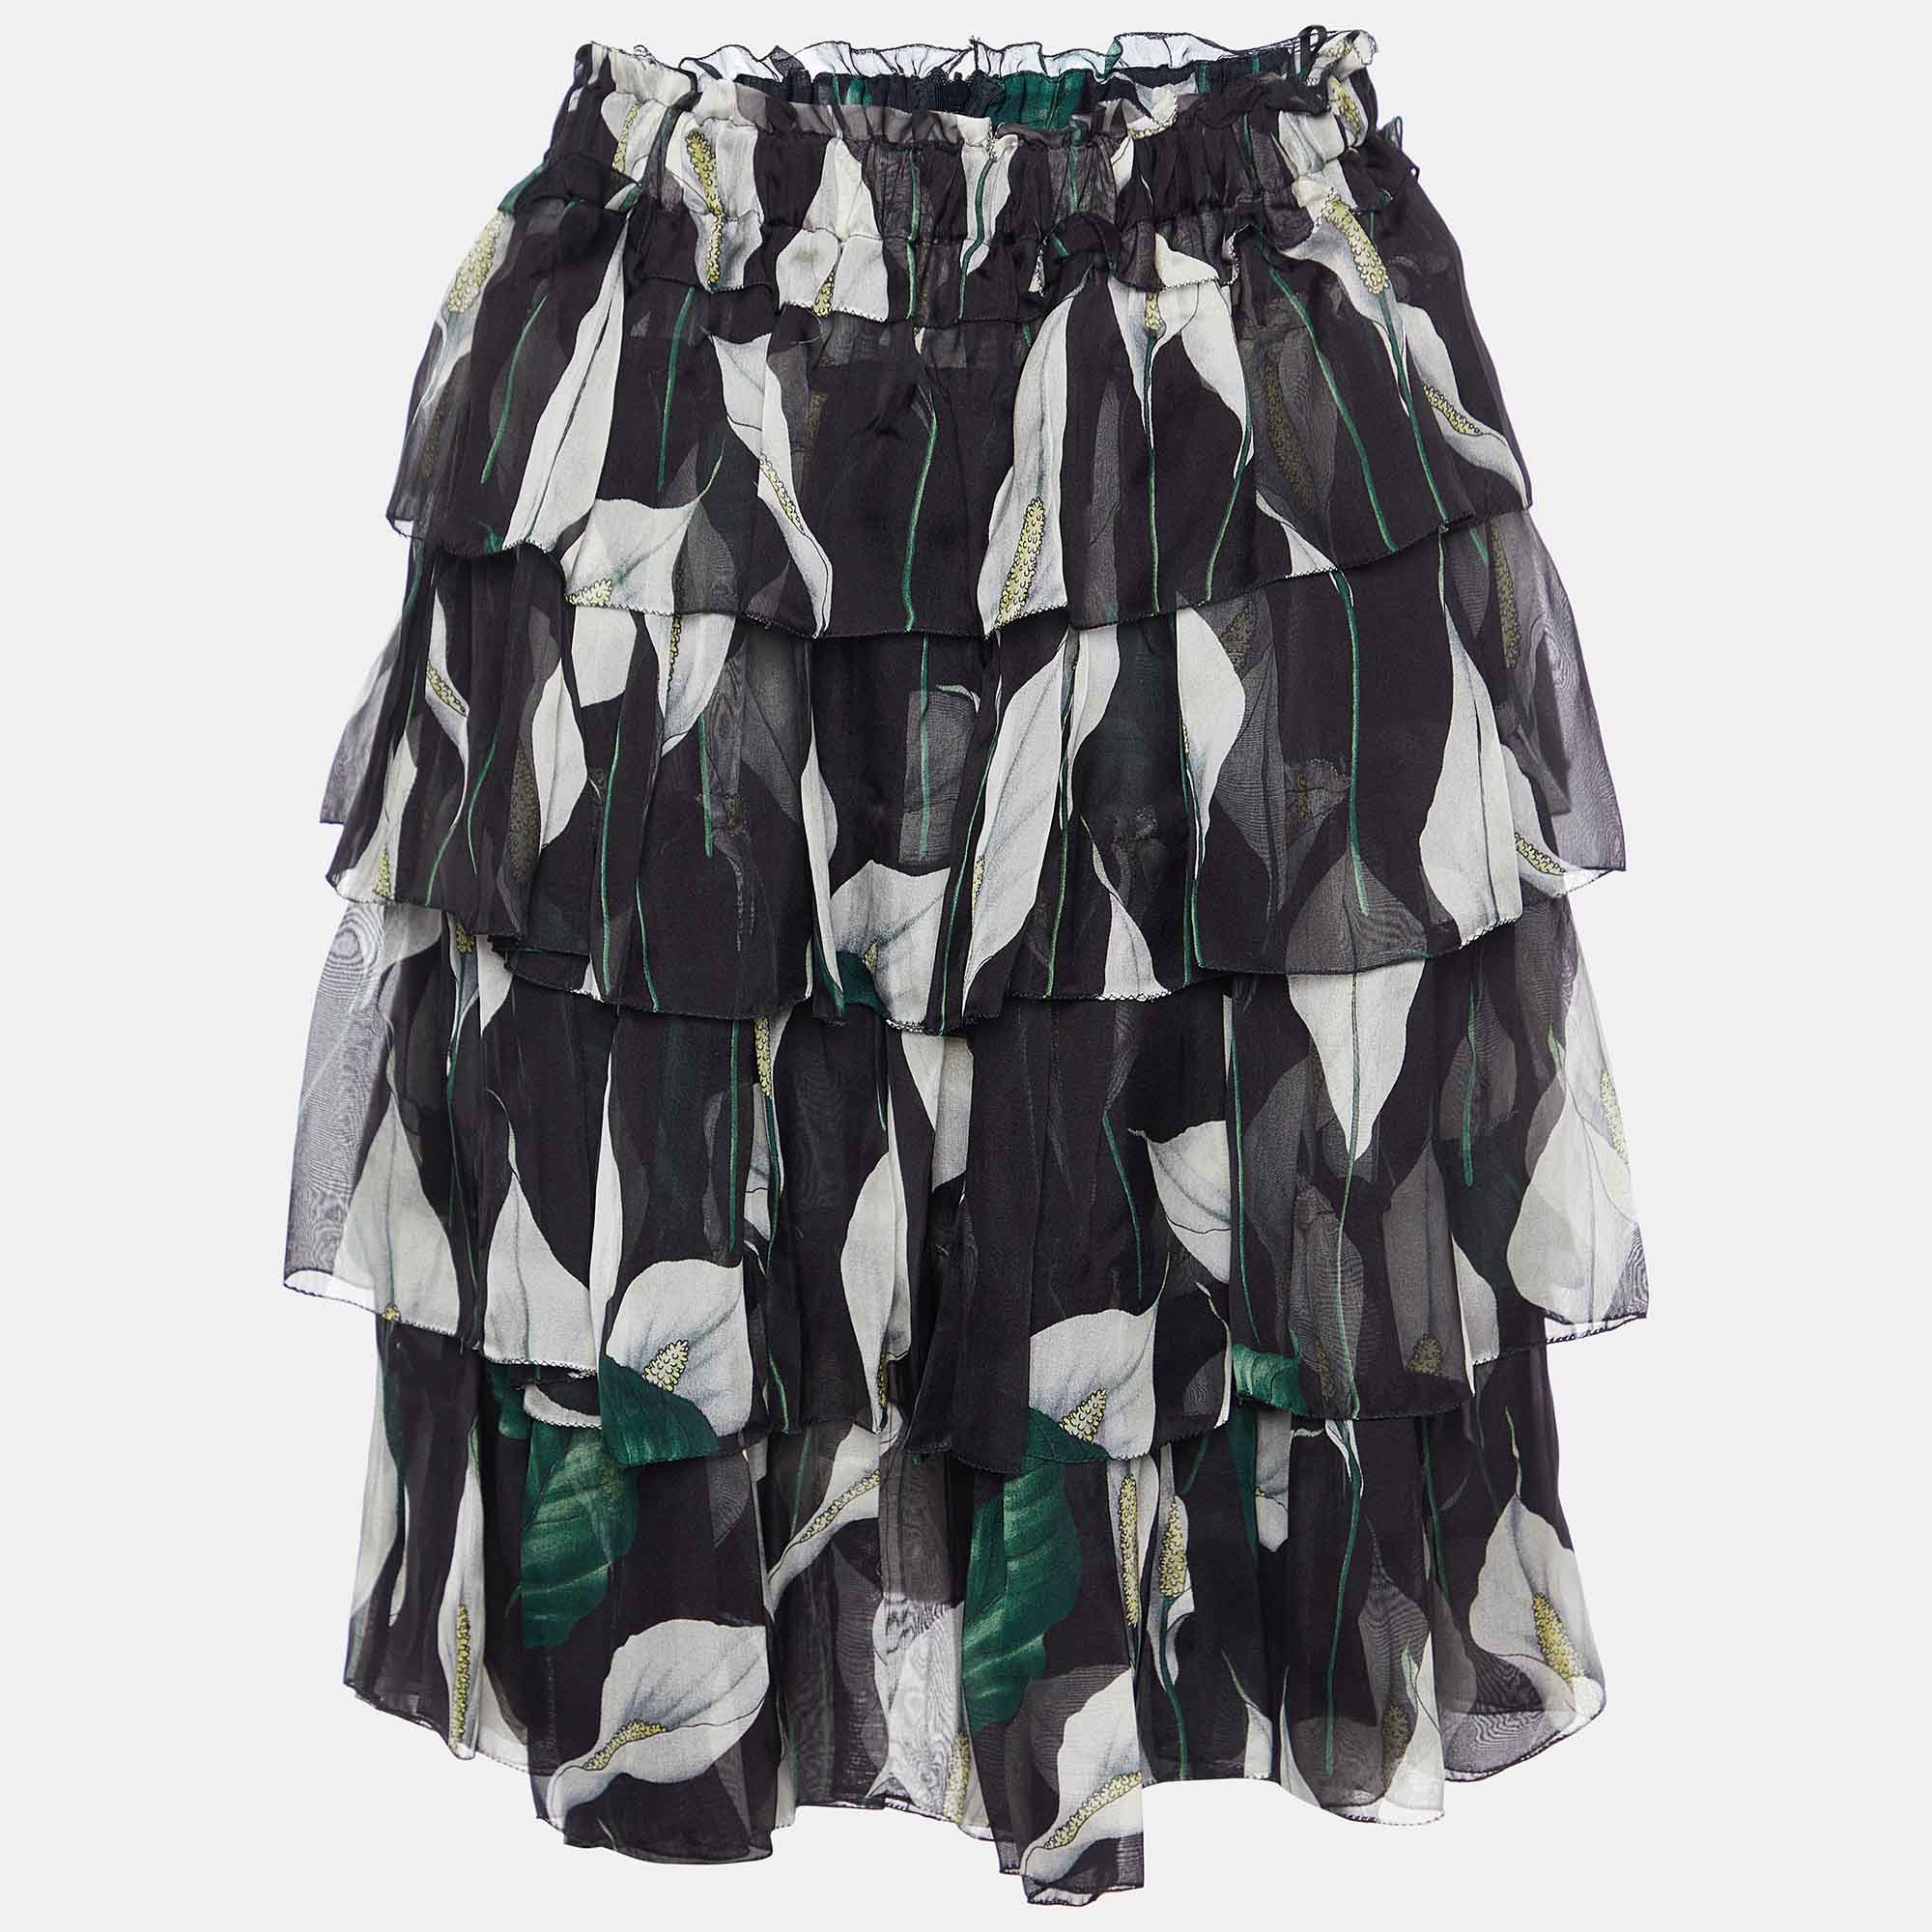 

D&G Black Calla Lilly Print Silk Chiffon Tiered Skirt